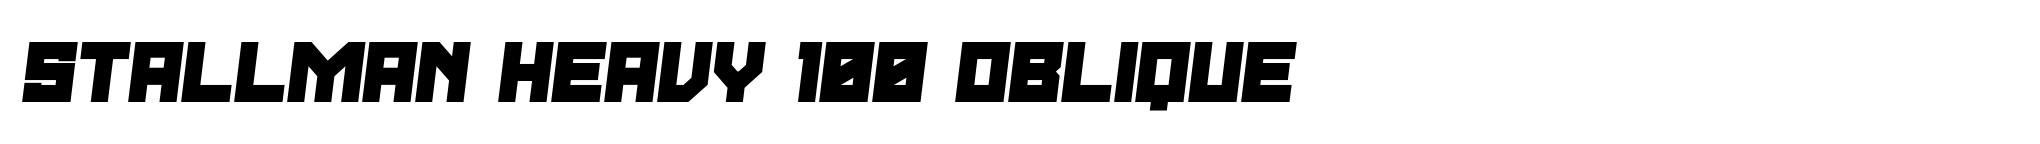 Stallman Heavy 100 Oblique image